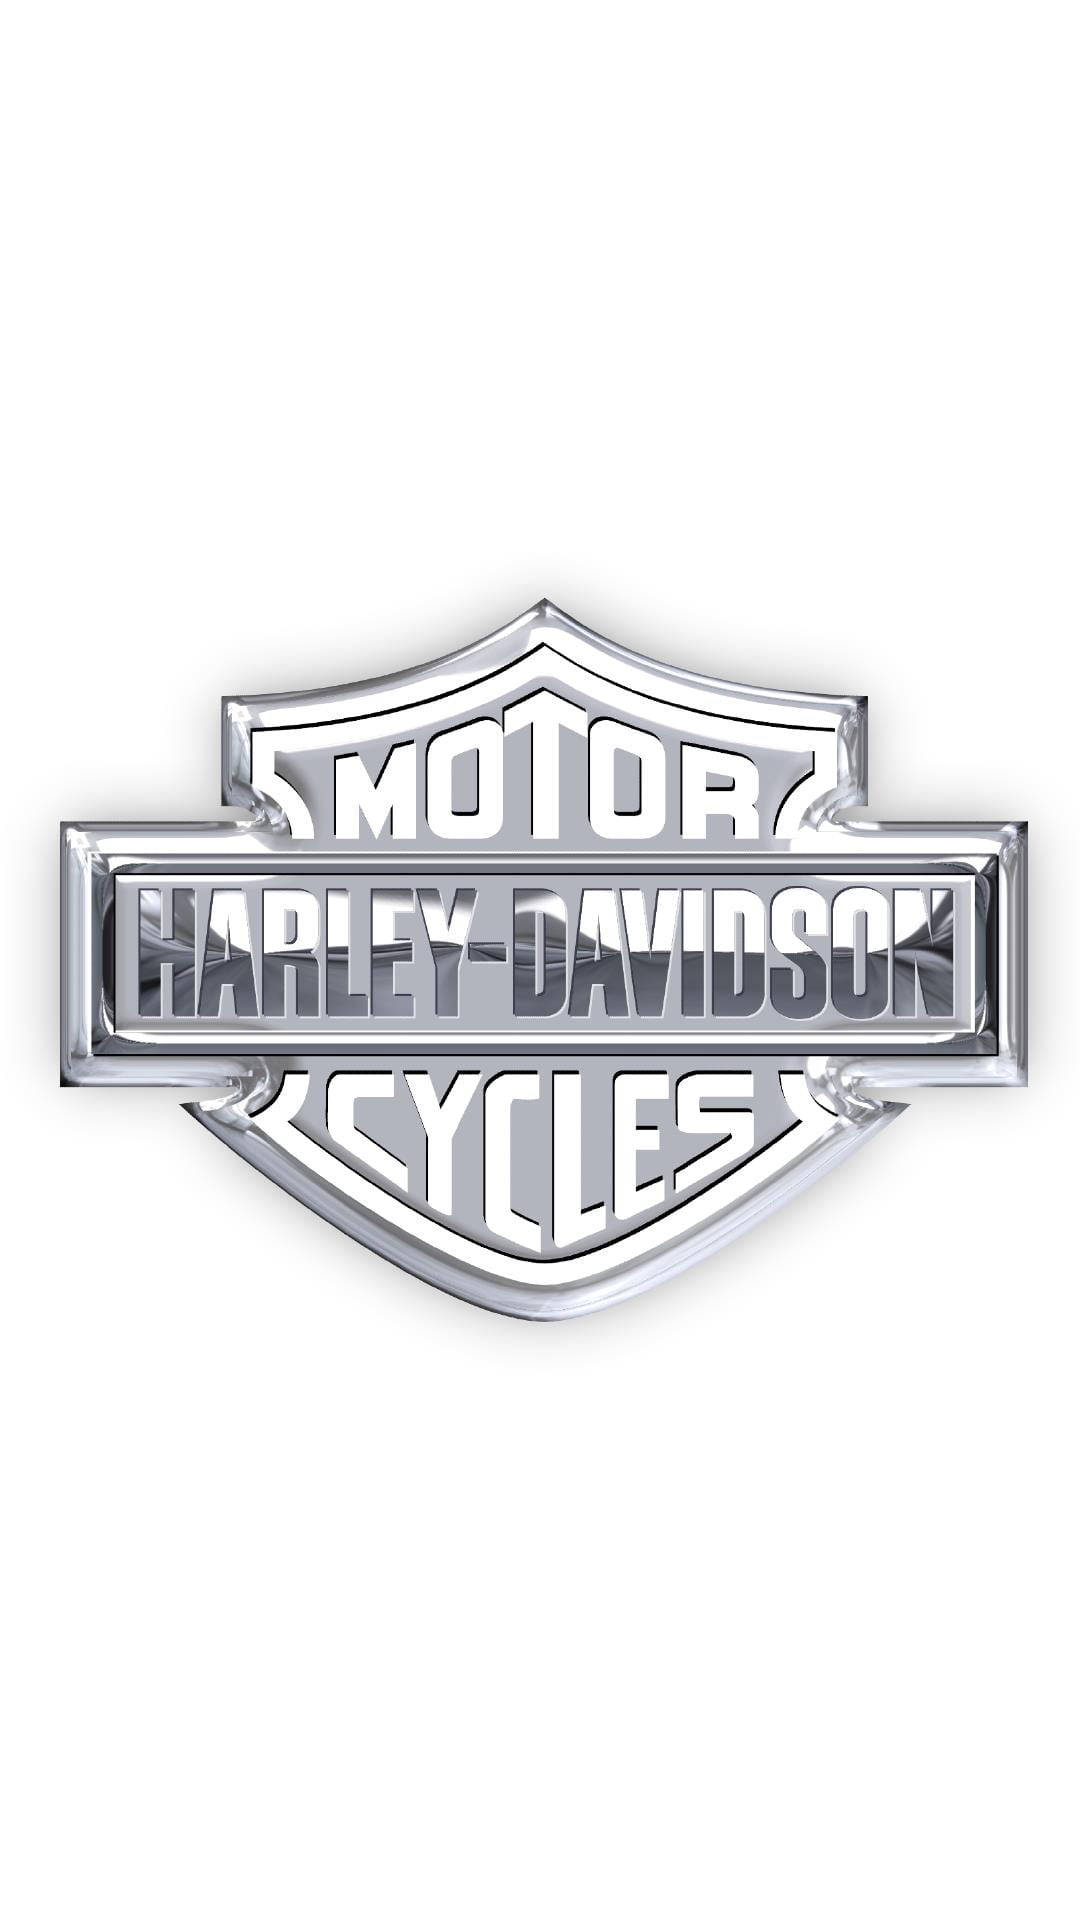 Silver Harley Davidson Mobile Picture